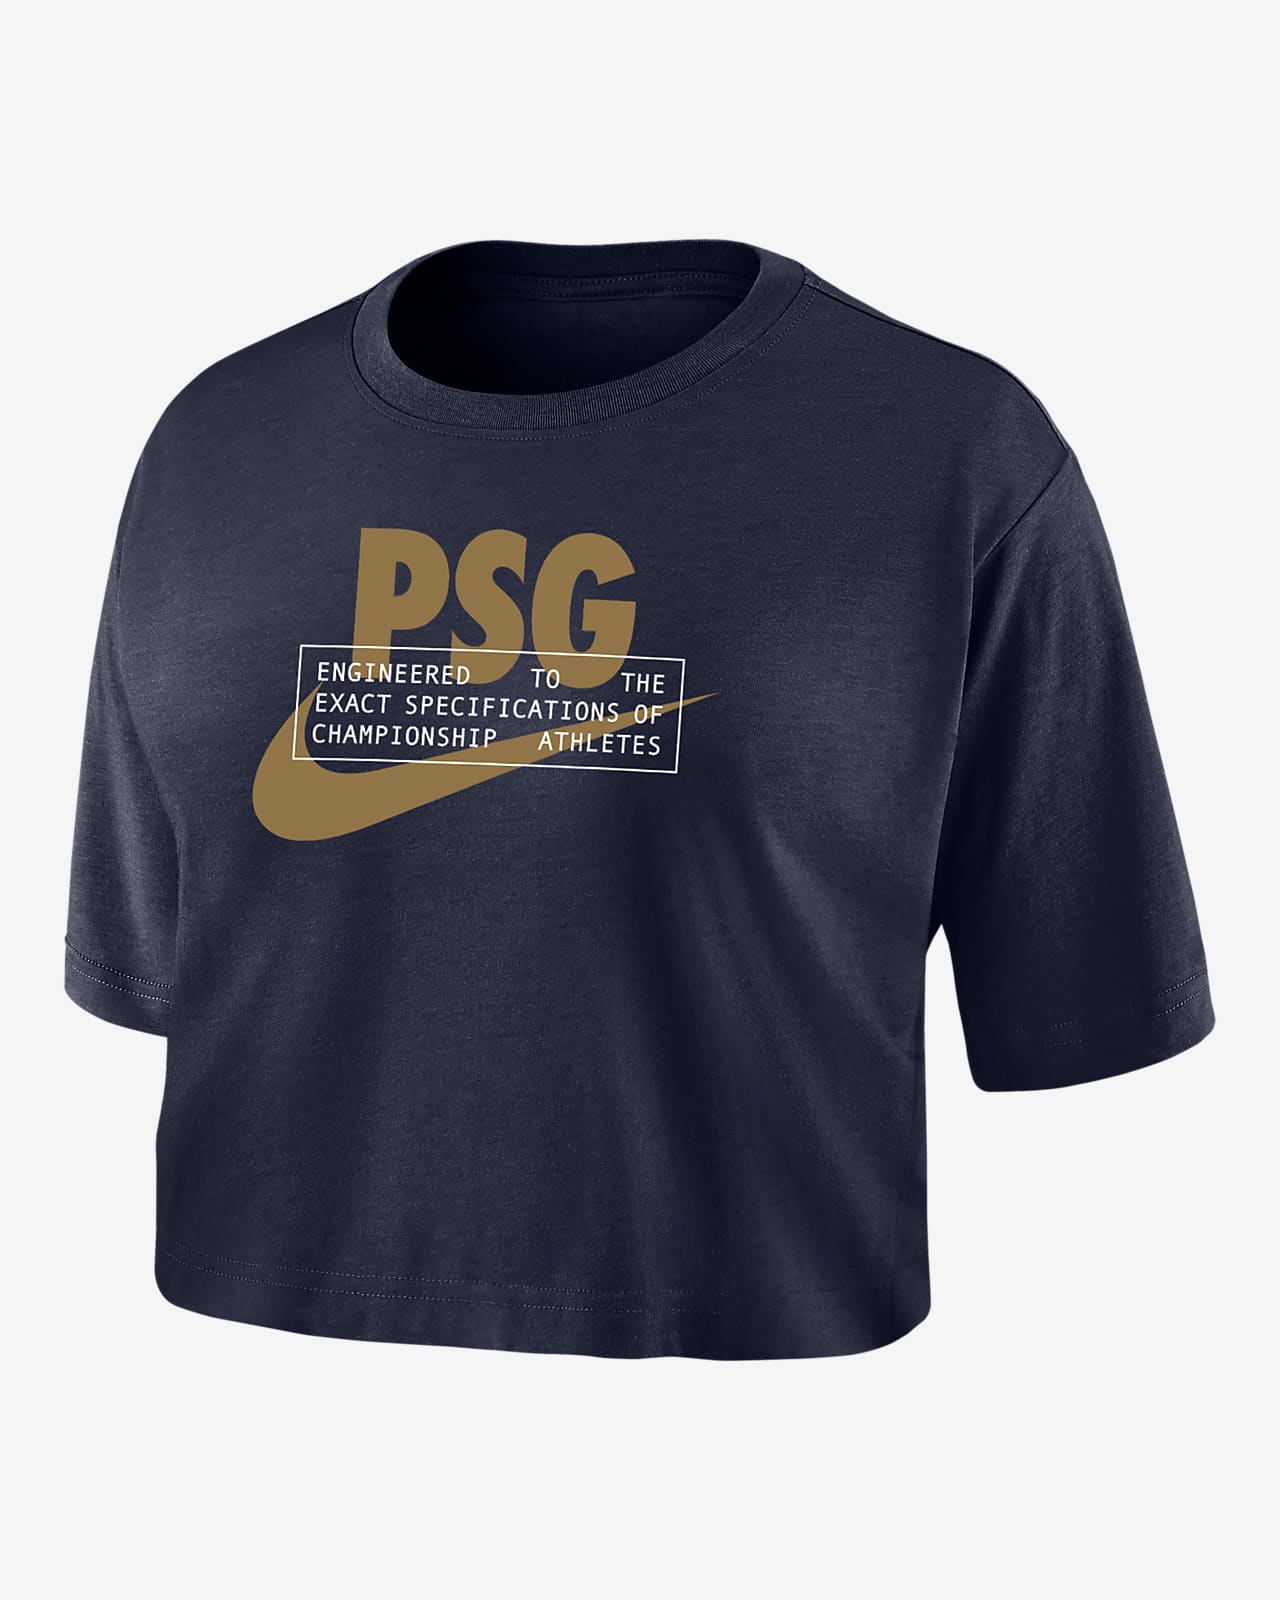 Paris Saint-Germain Women's Nike Dri-FIT Soccer Cropped T-Shirt